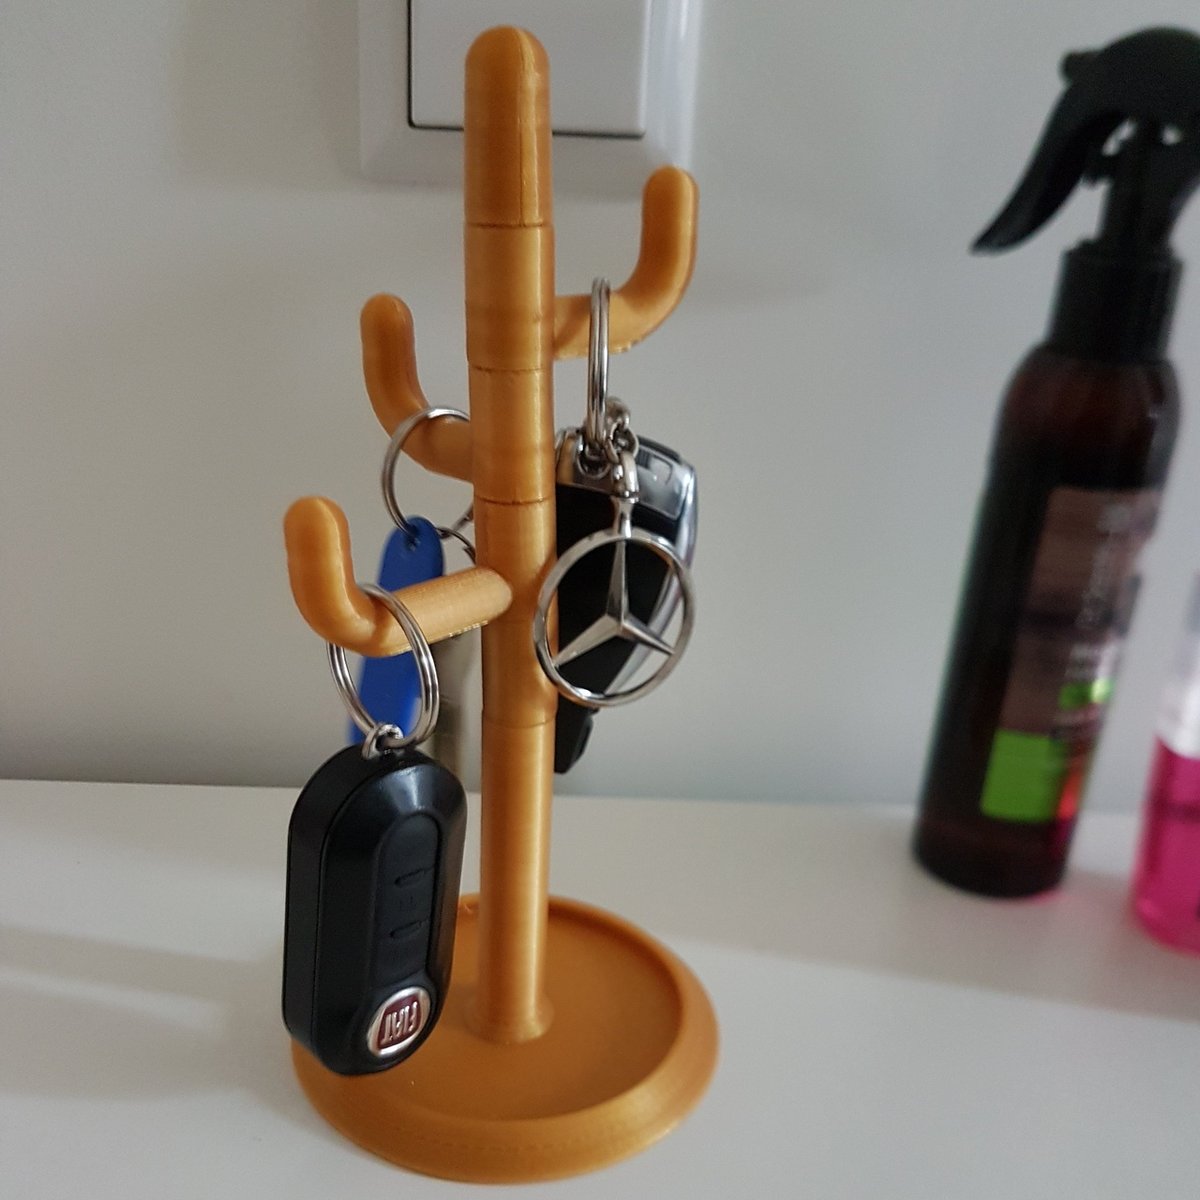 A super cute way to keep your keys organized